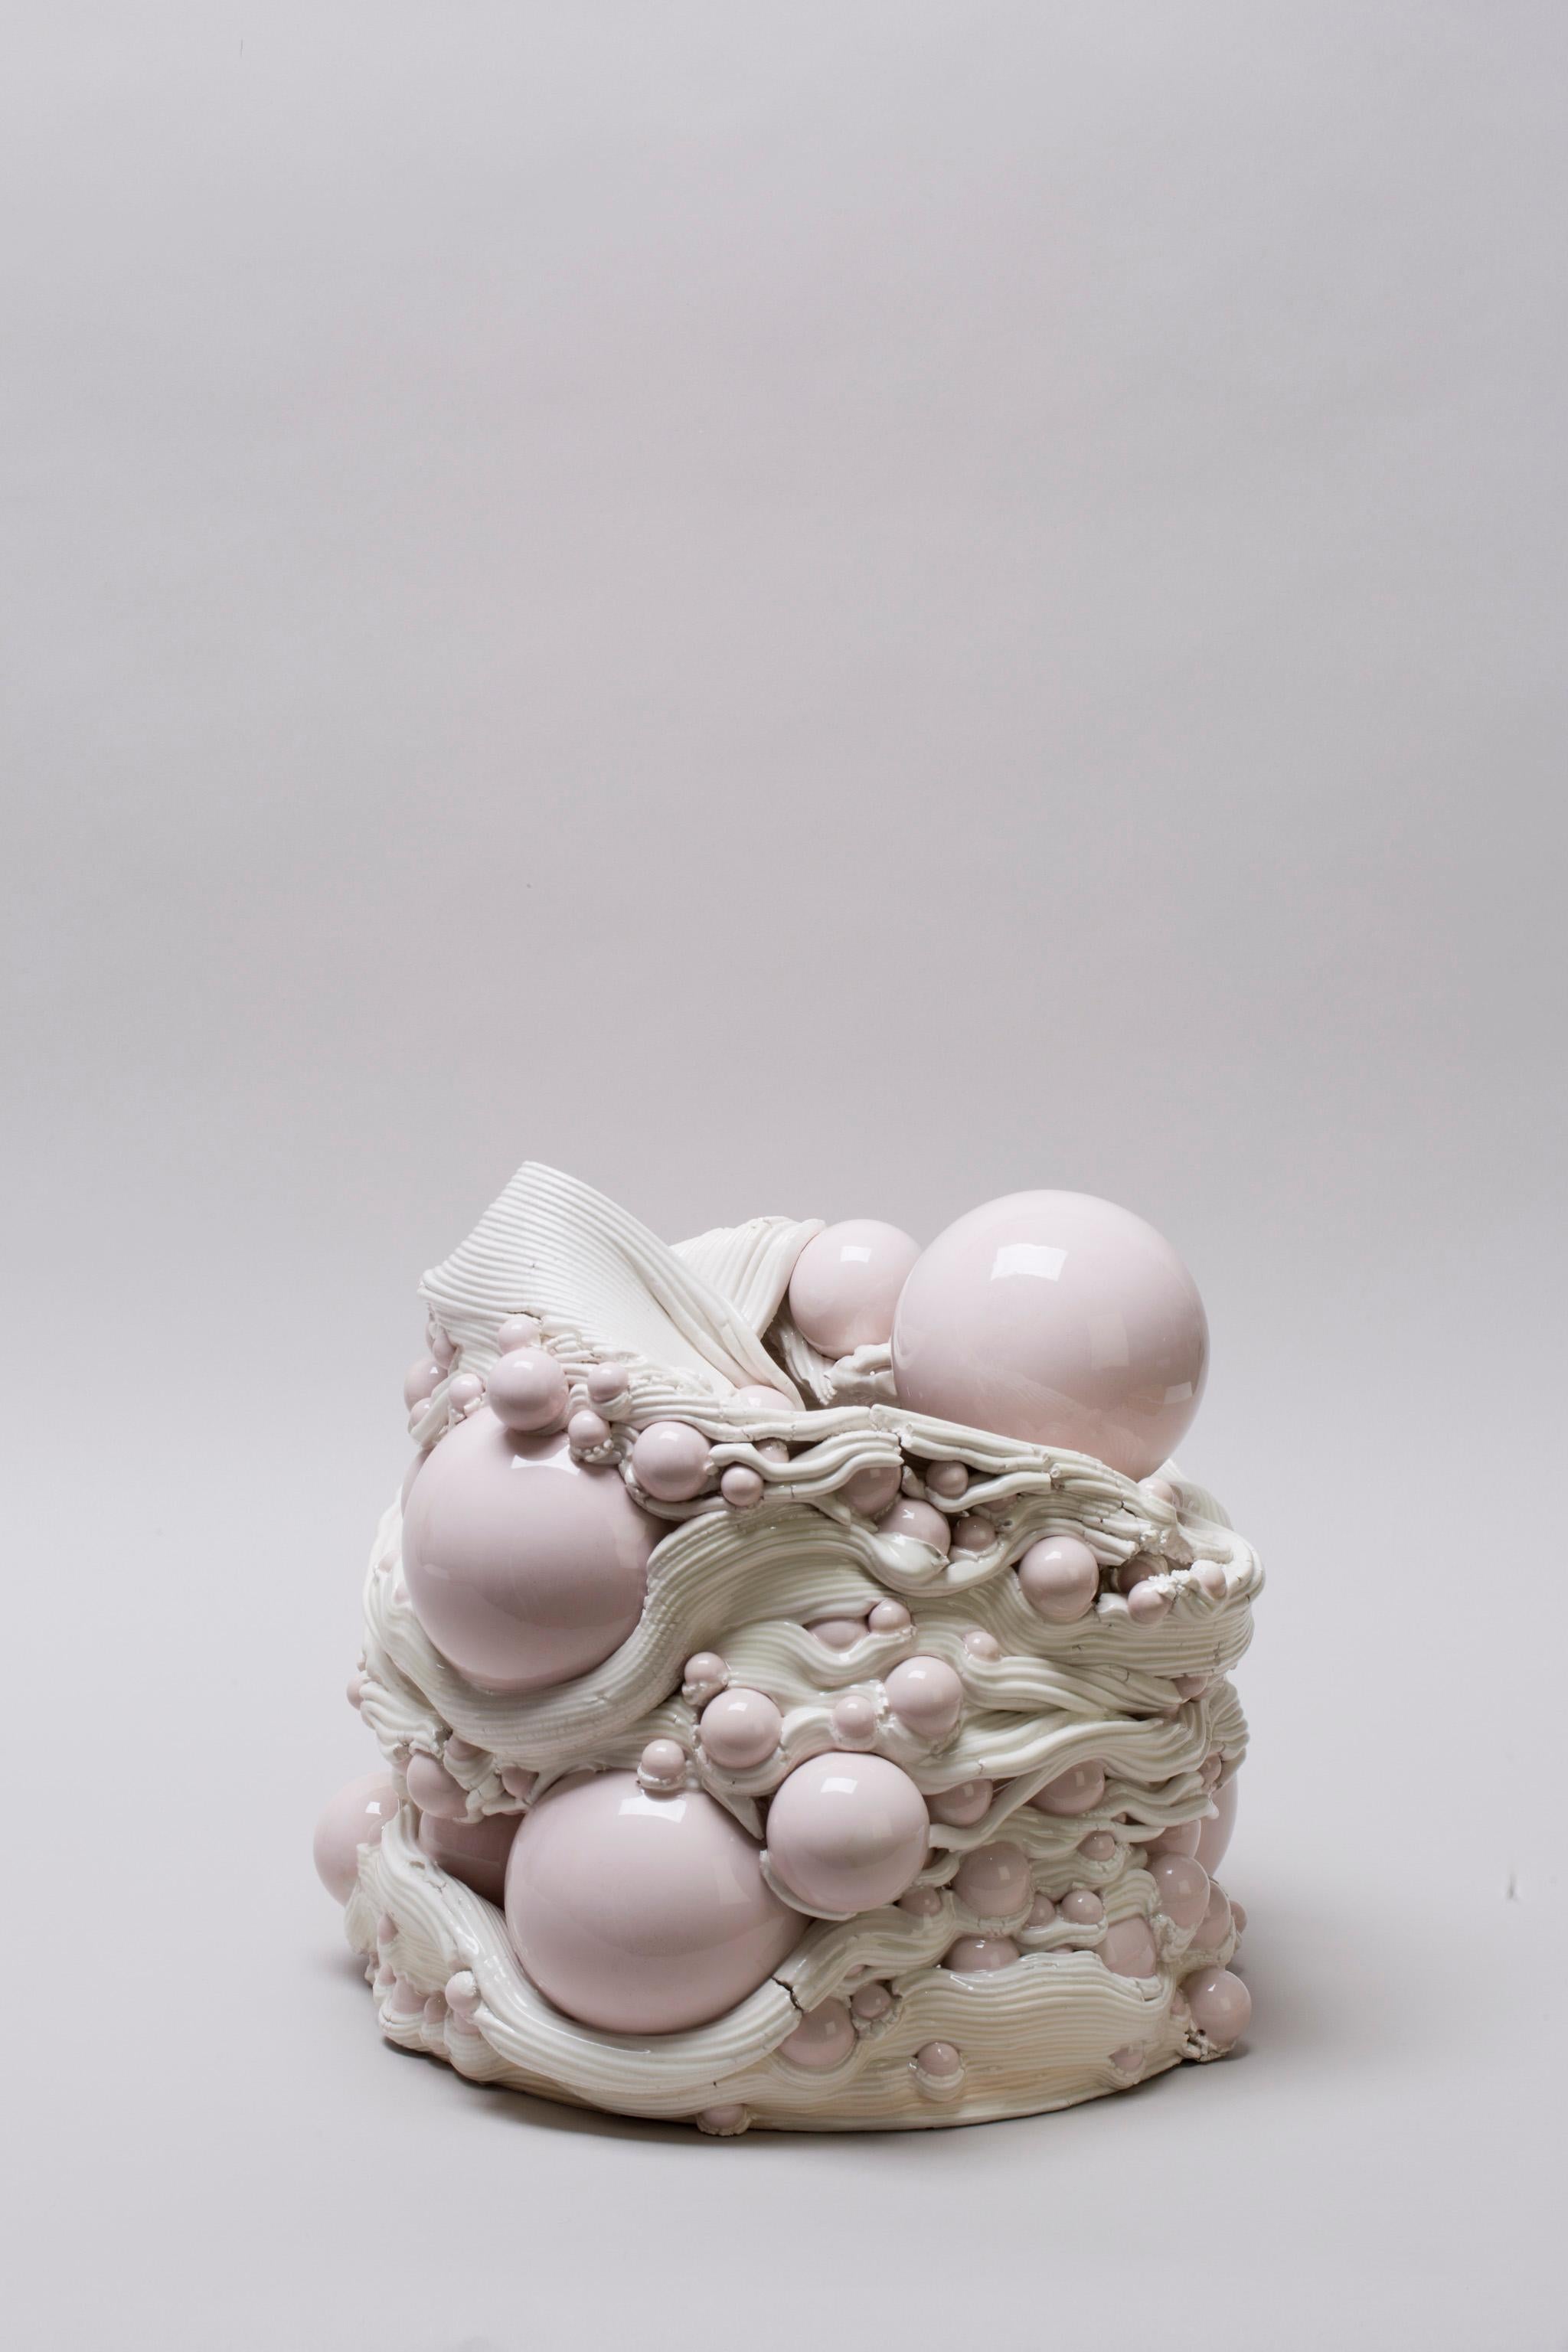 White & Pink Ceramic Sculptural Vase Italian Contemporary, 21st Century 3D Print For Sale 2